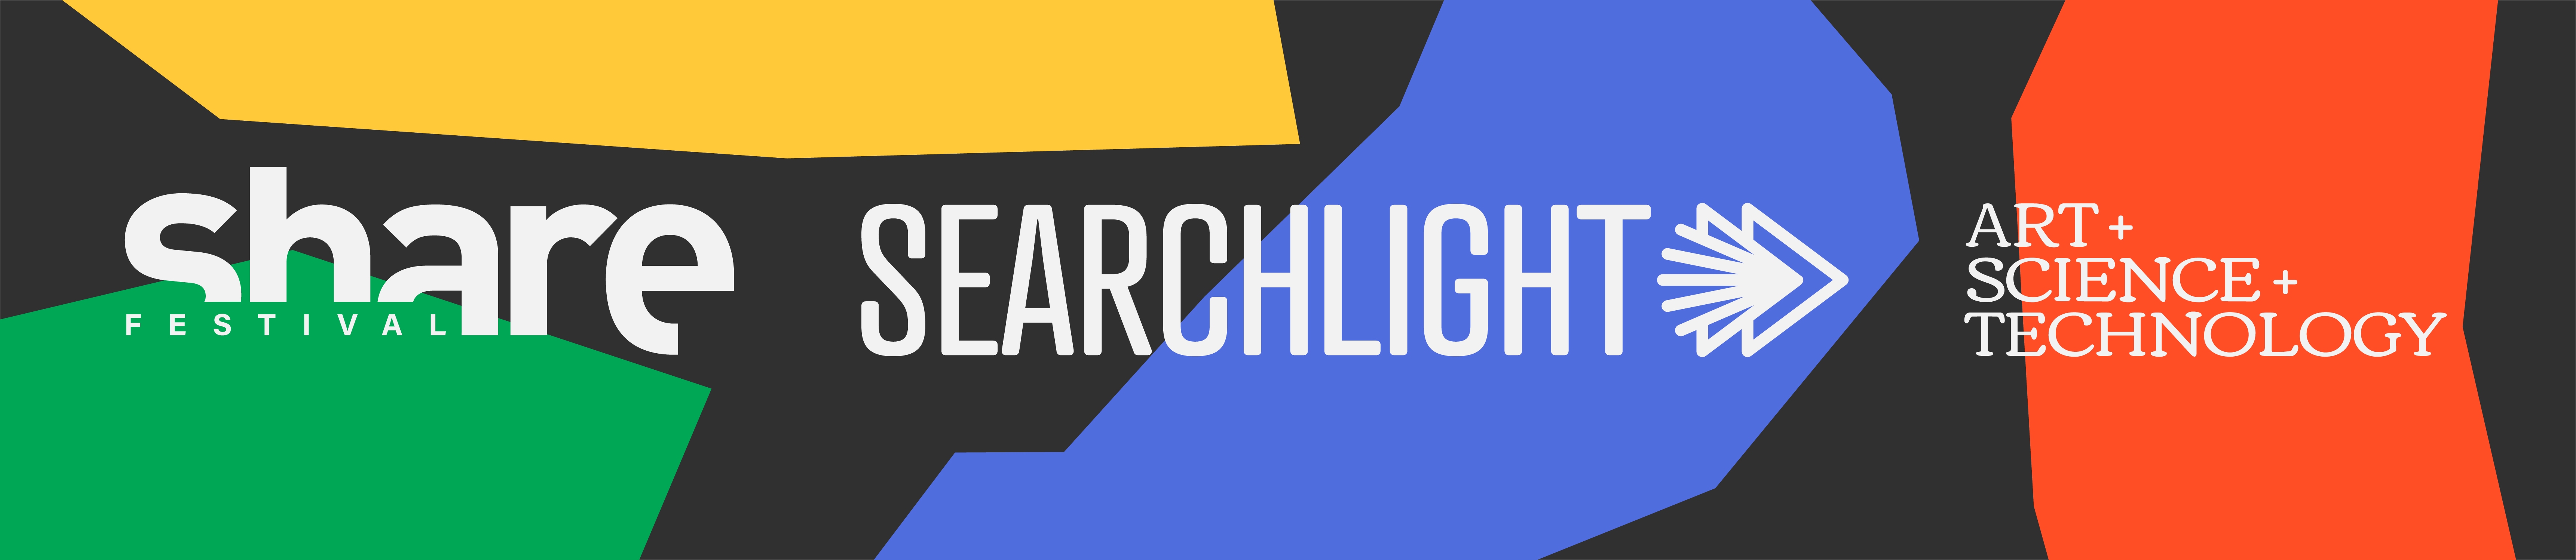 Share Prize XVI - Searchlight